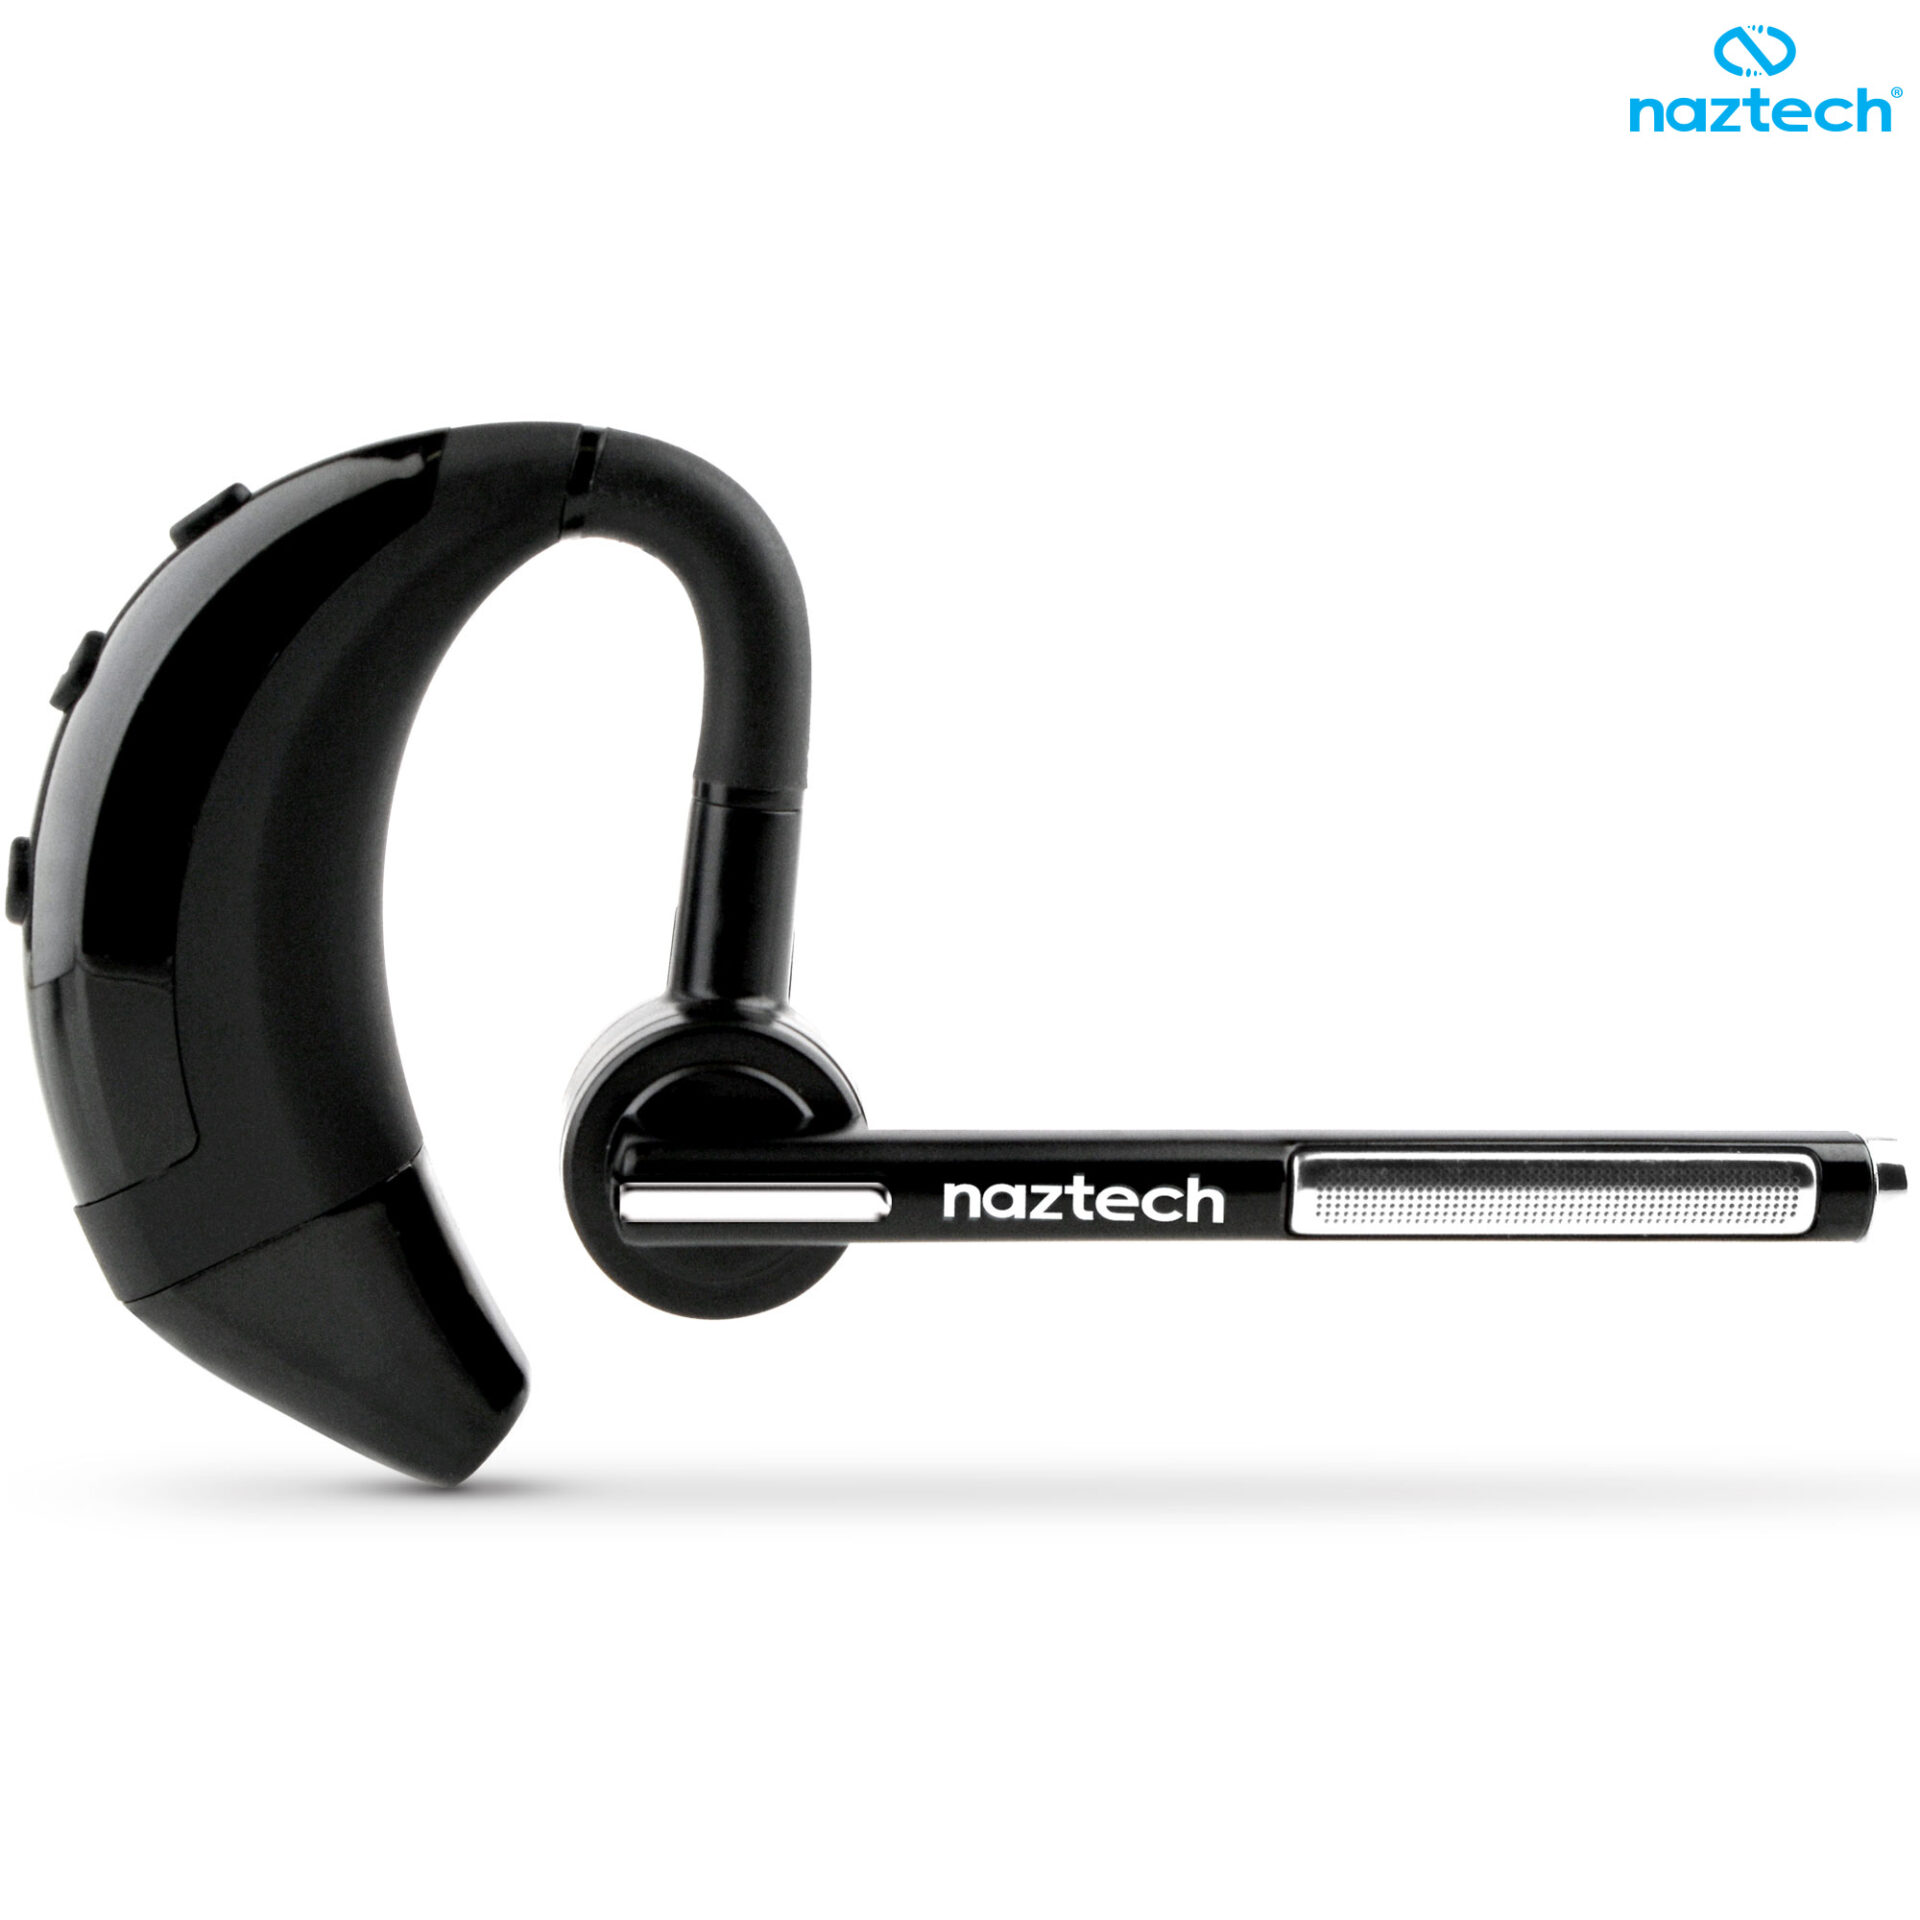 Naztech N750 Emerge Wireless Headset